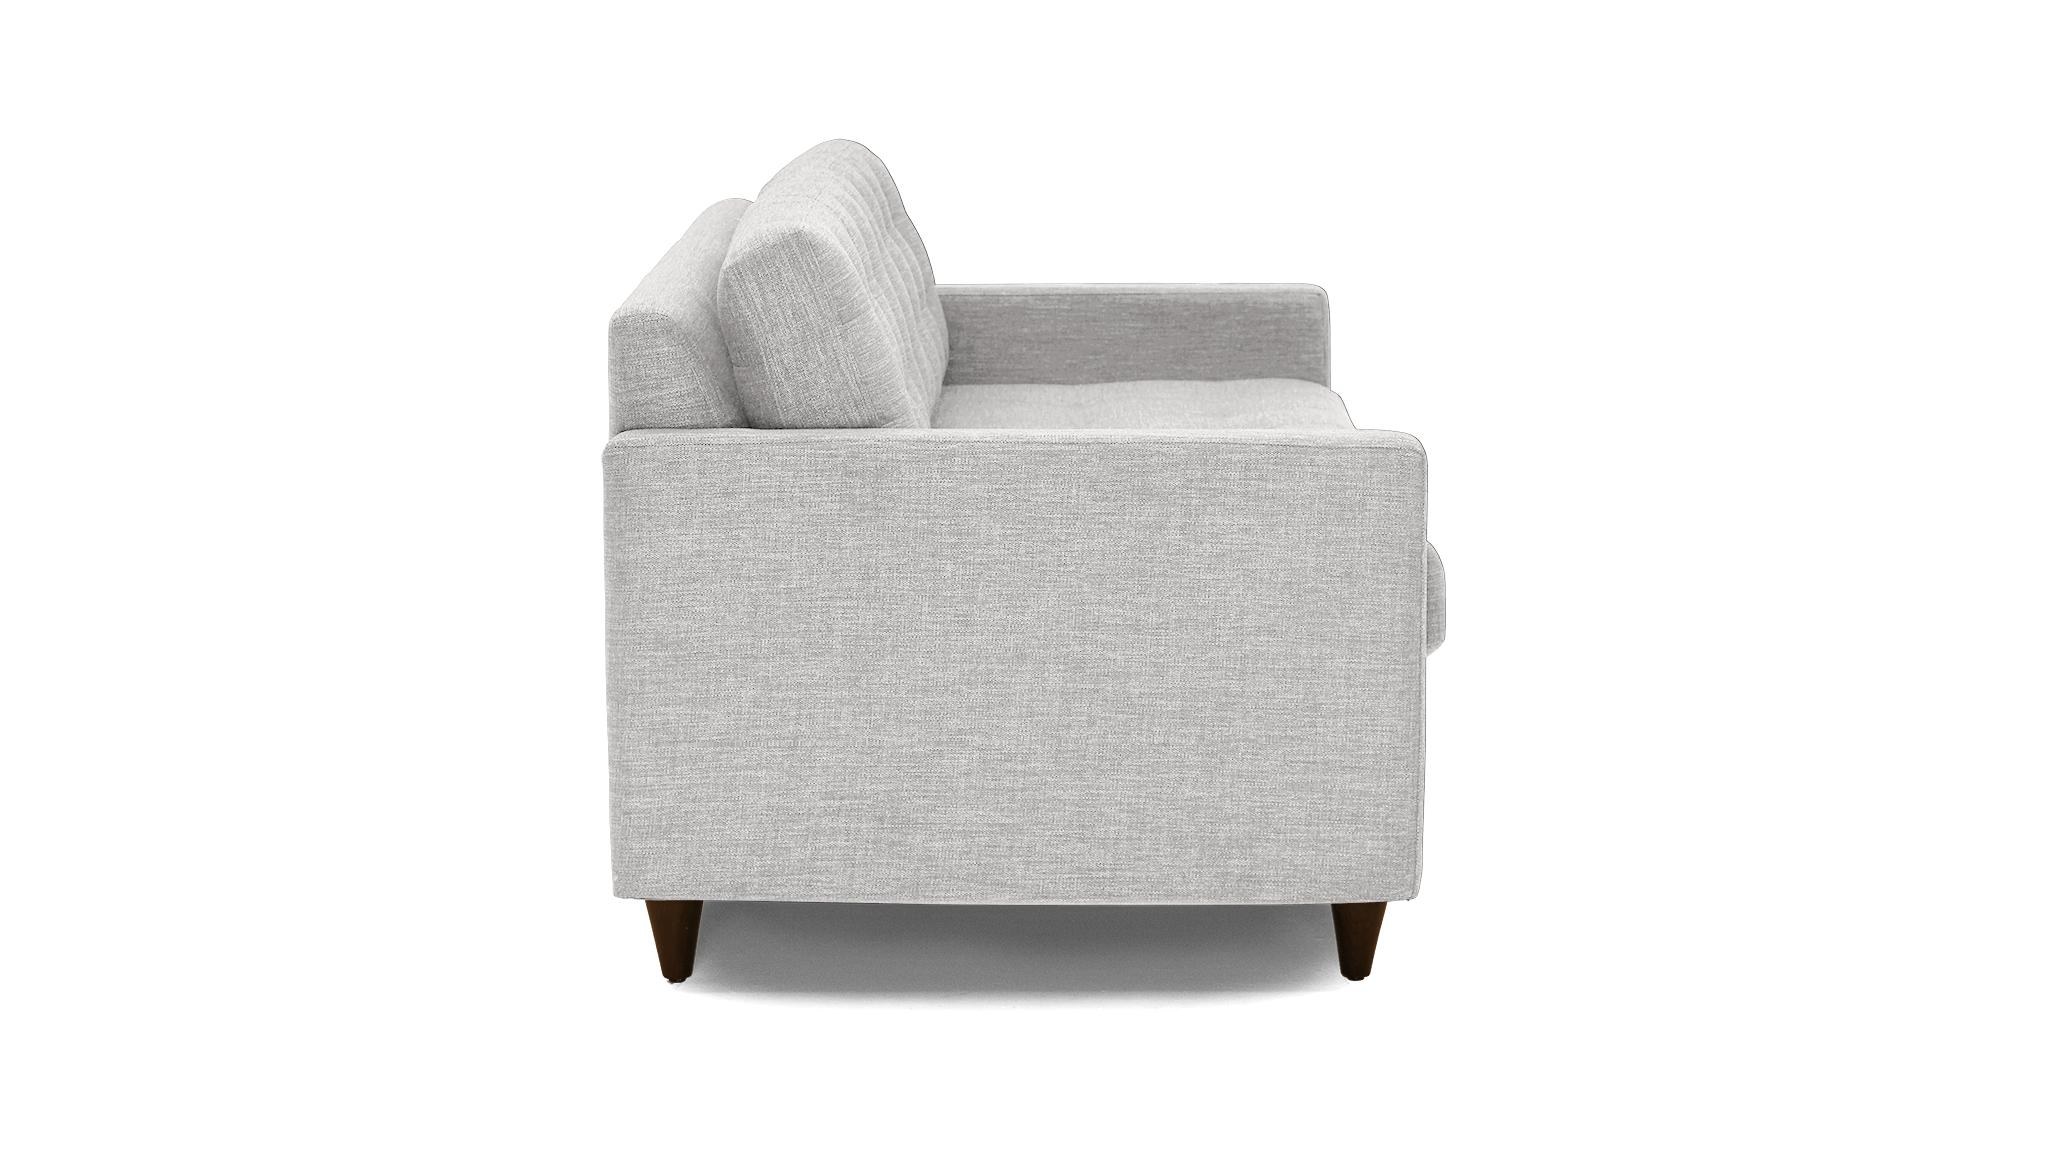 Gray Eliot Mid Century Modern Sleeper Sofa - Sunbrella Premier Fog - Mocha - Foam - Image 2